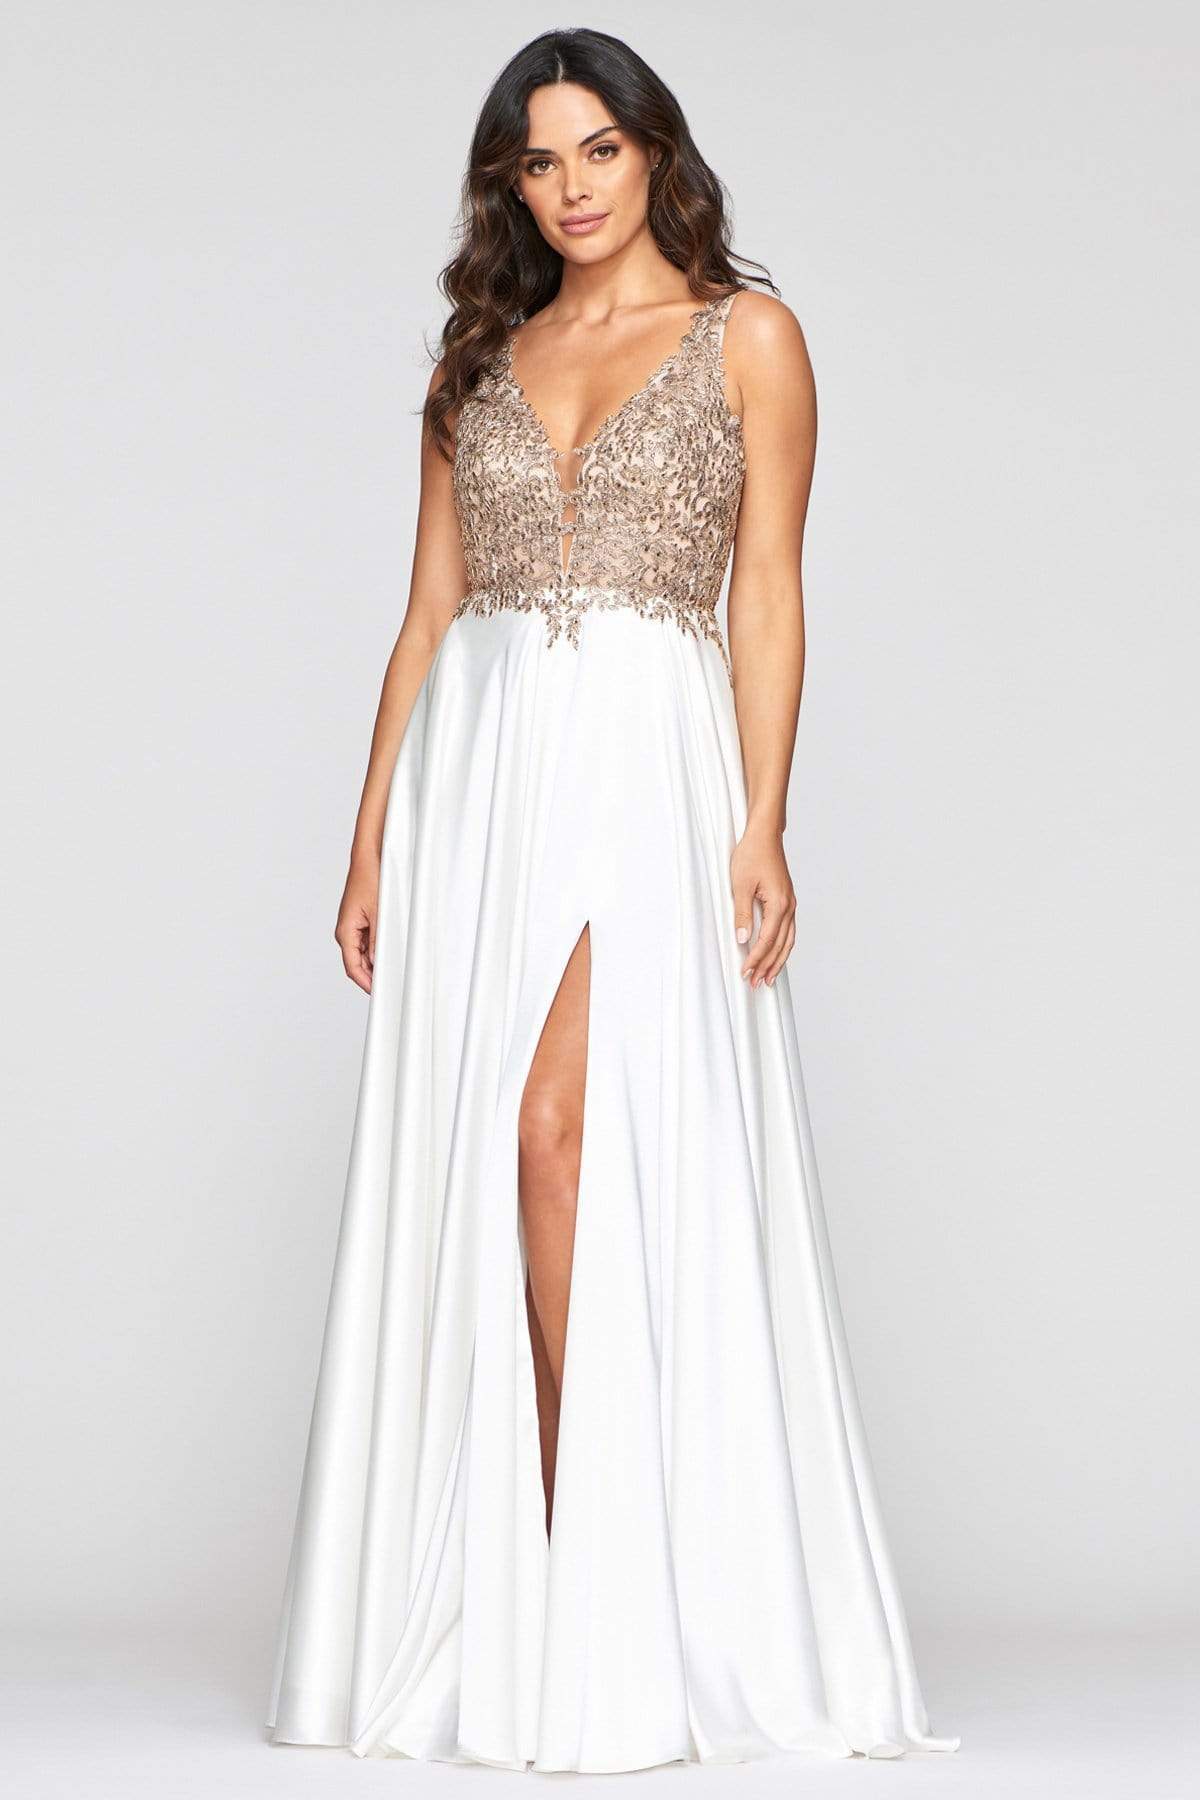 Faviana - Metallic Lace Bodice Satin Dress 10407SC In White and Gold